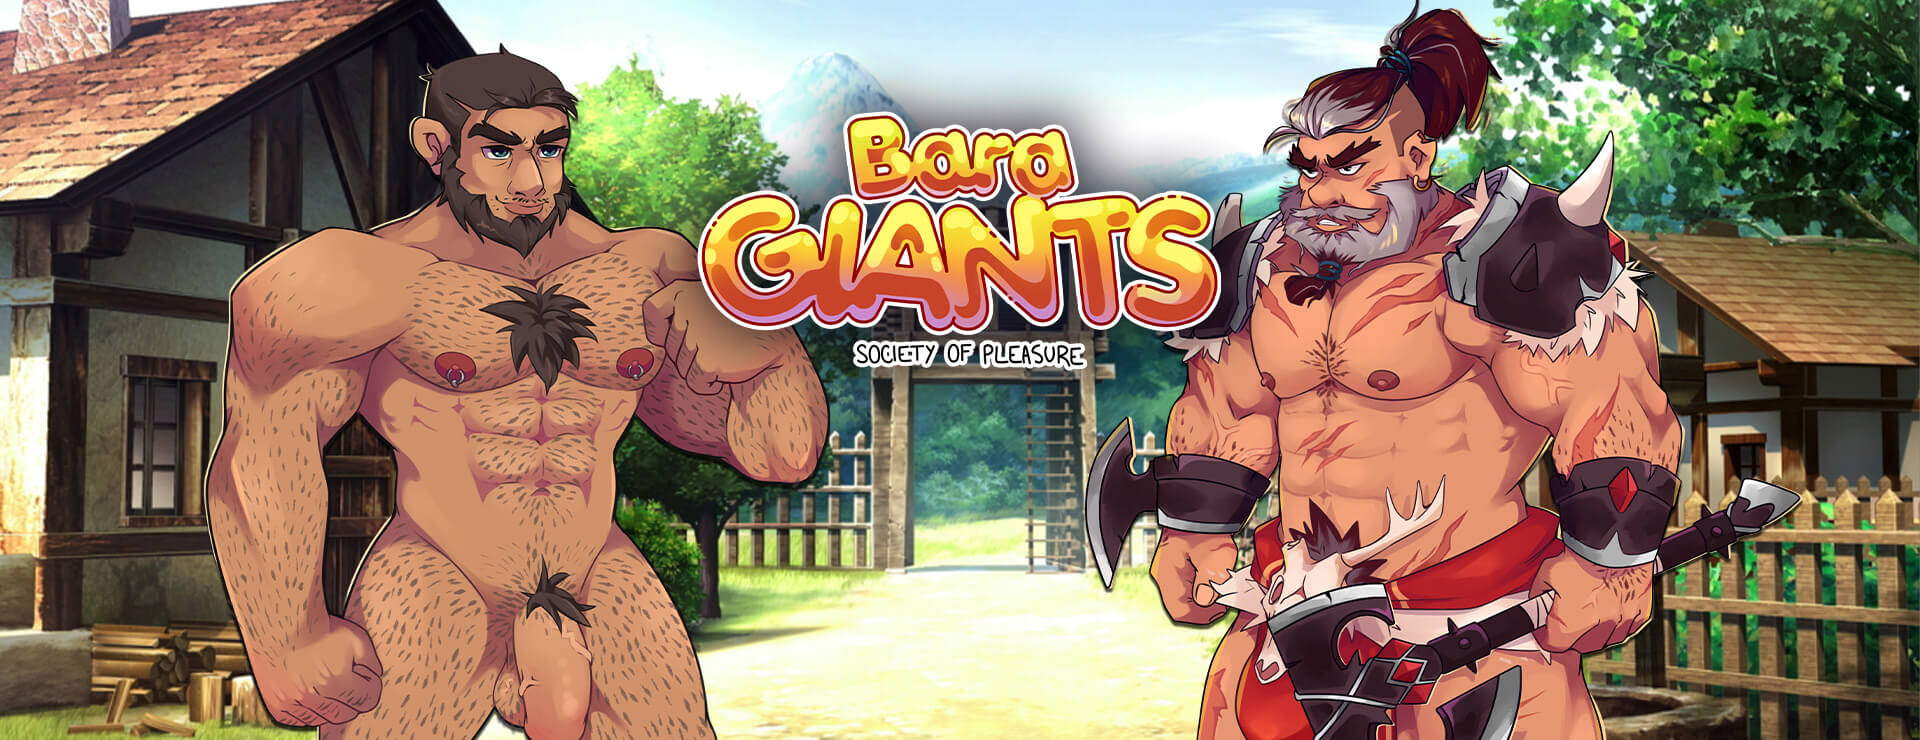 Bara Giants – Society of Pleasure - RPG Game